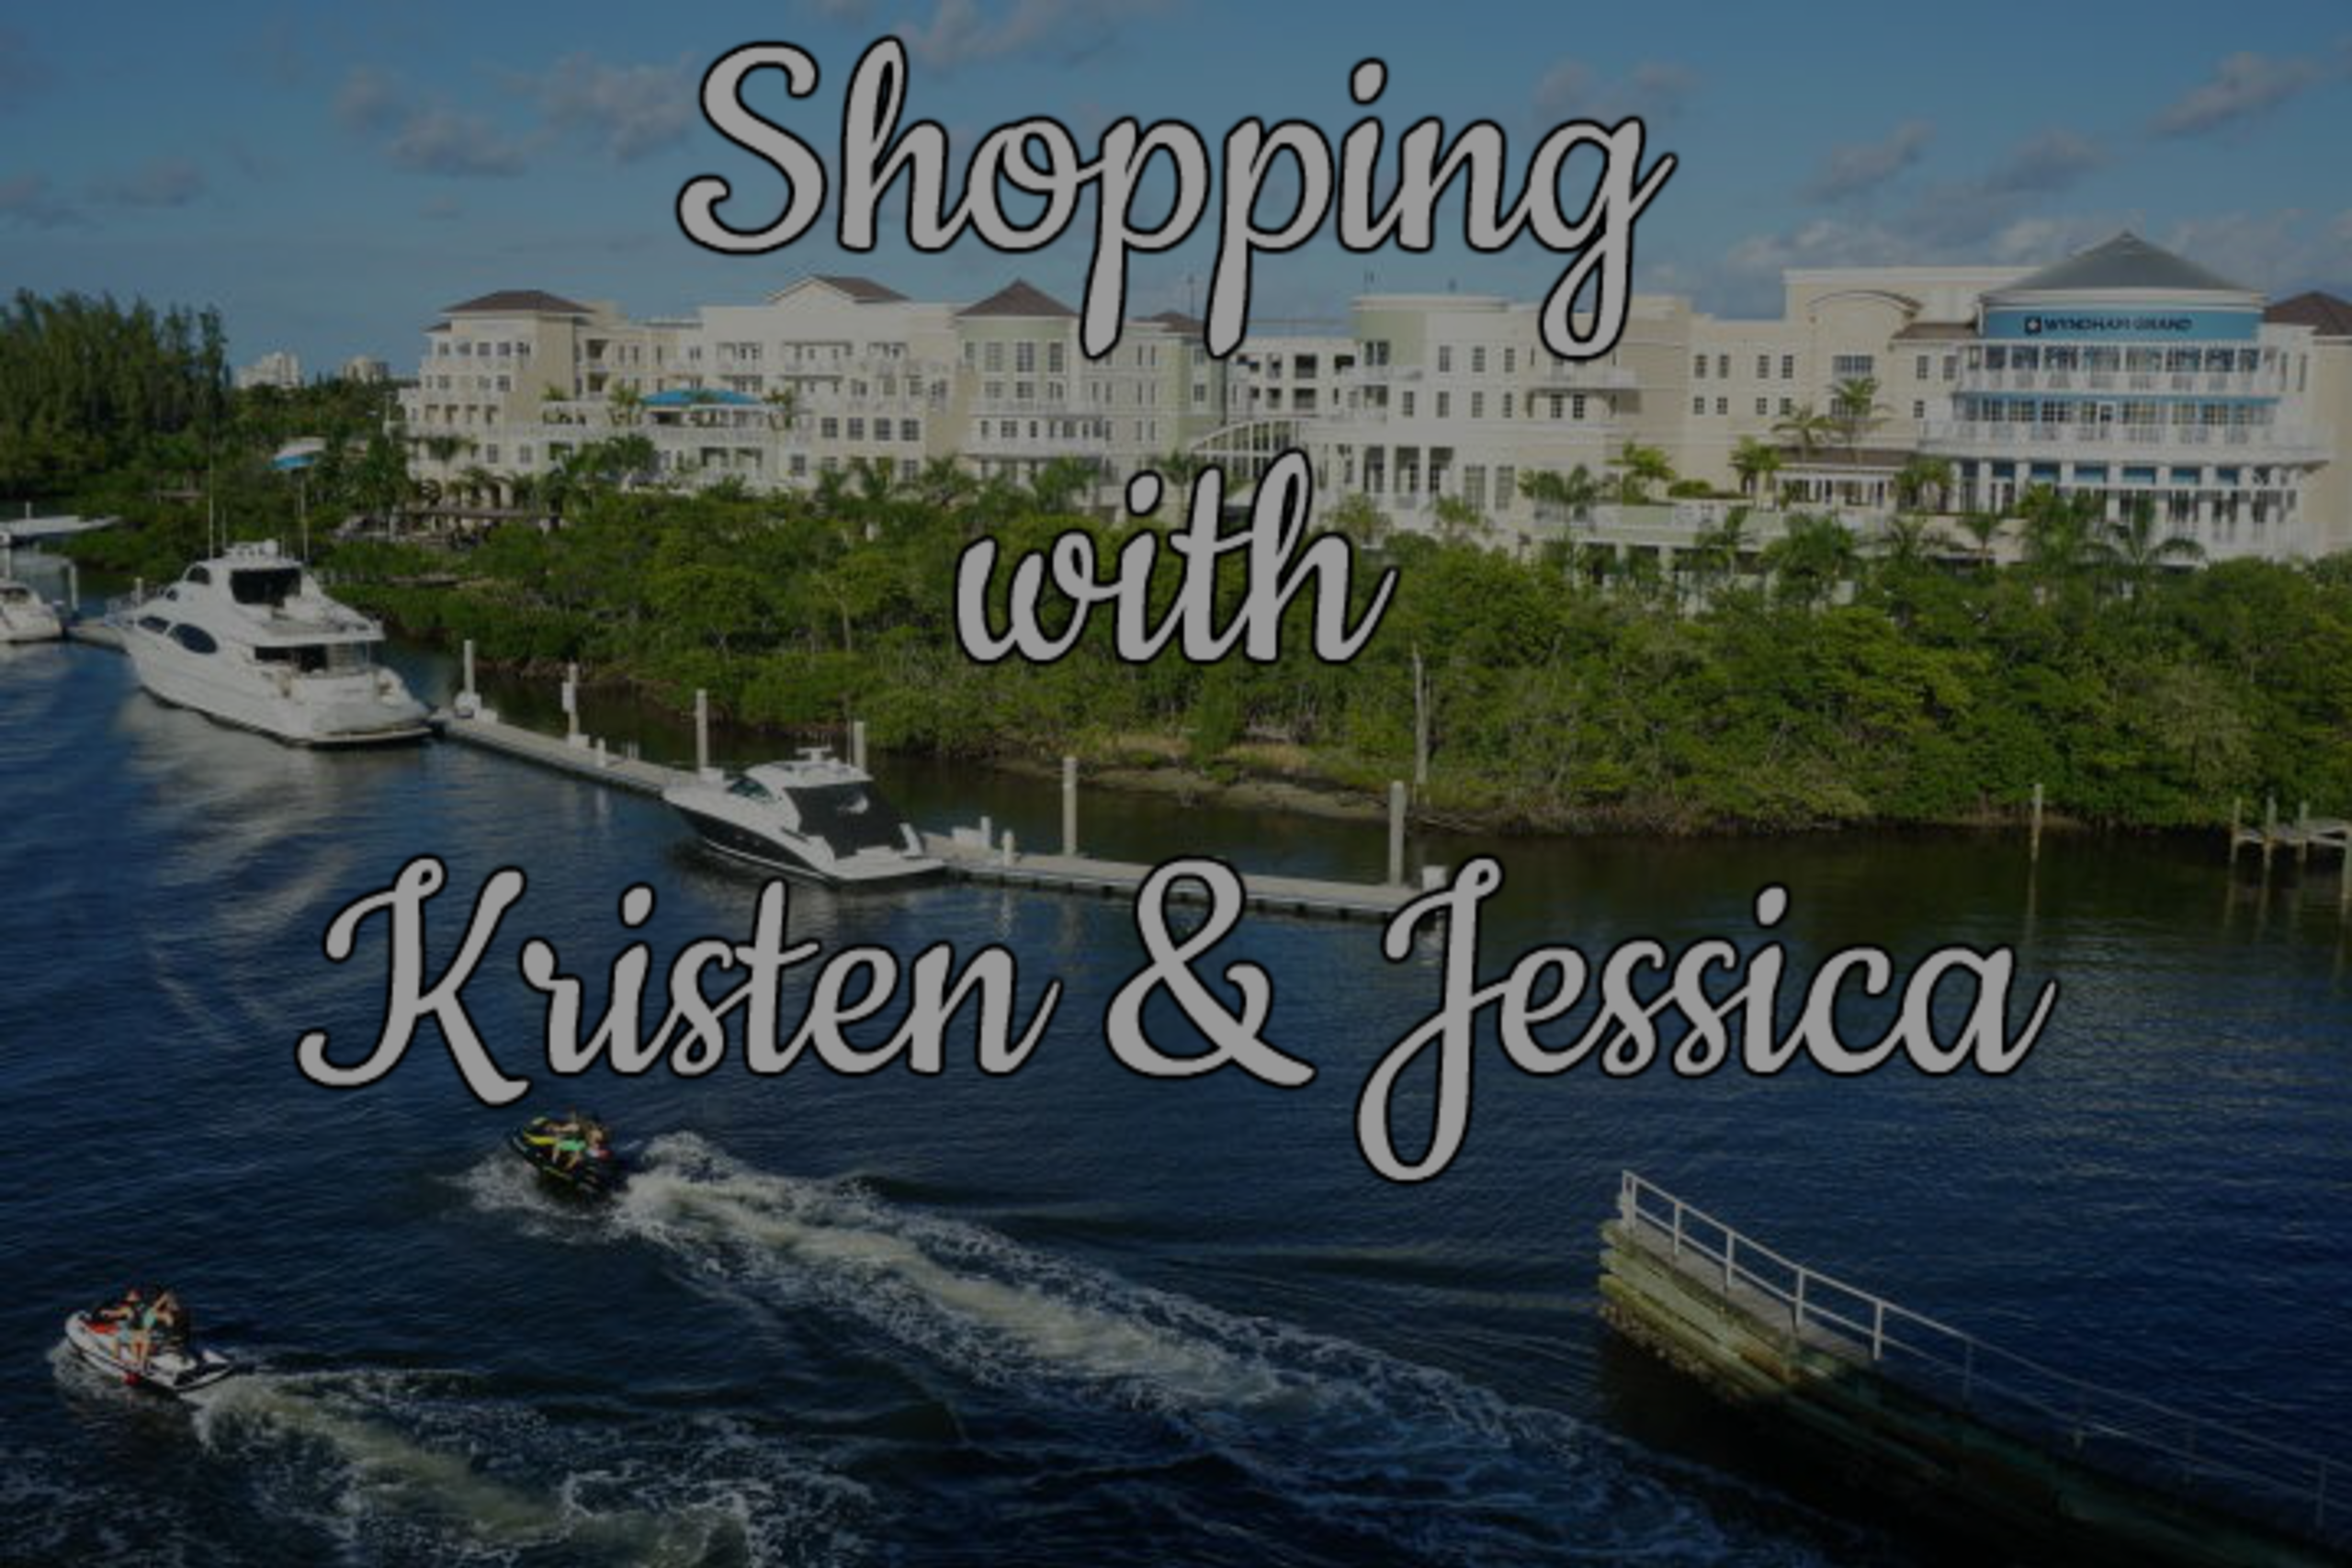 Kristen &#038; Jessica&#8217;s Palm Beaches Destination Guide to Shopping